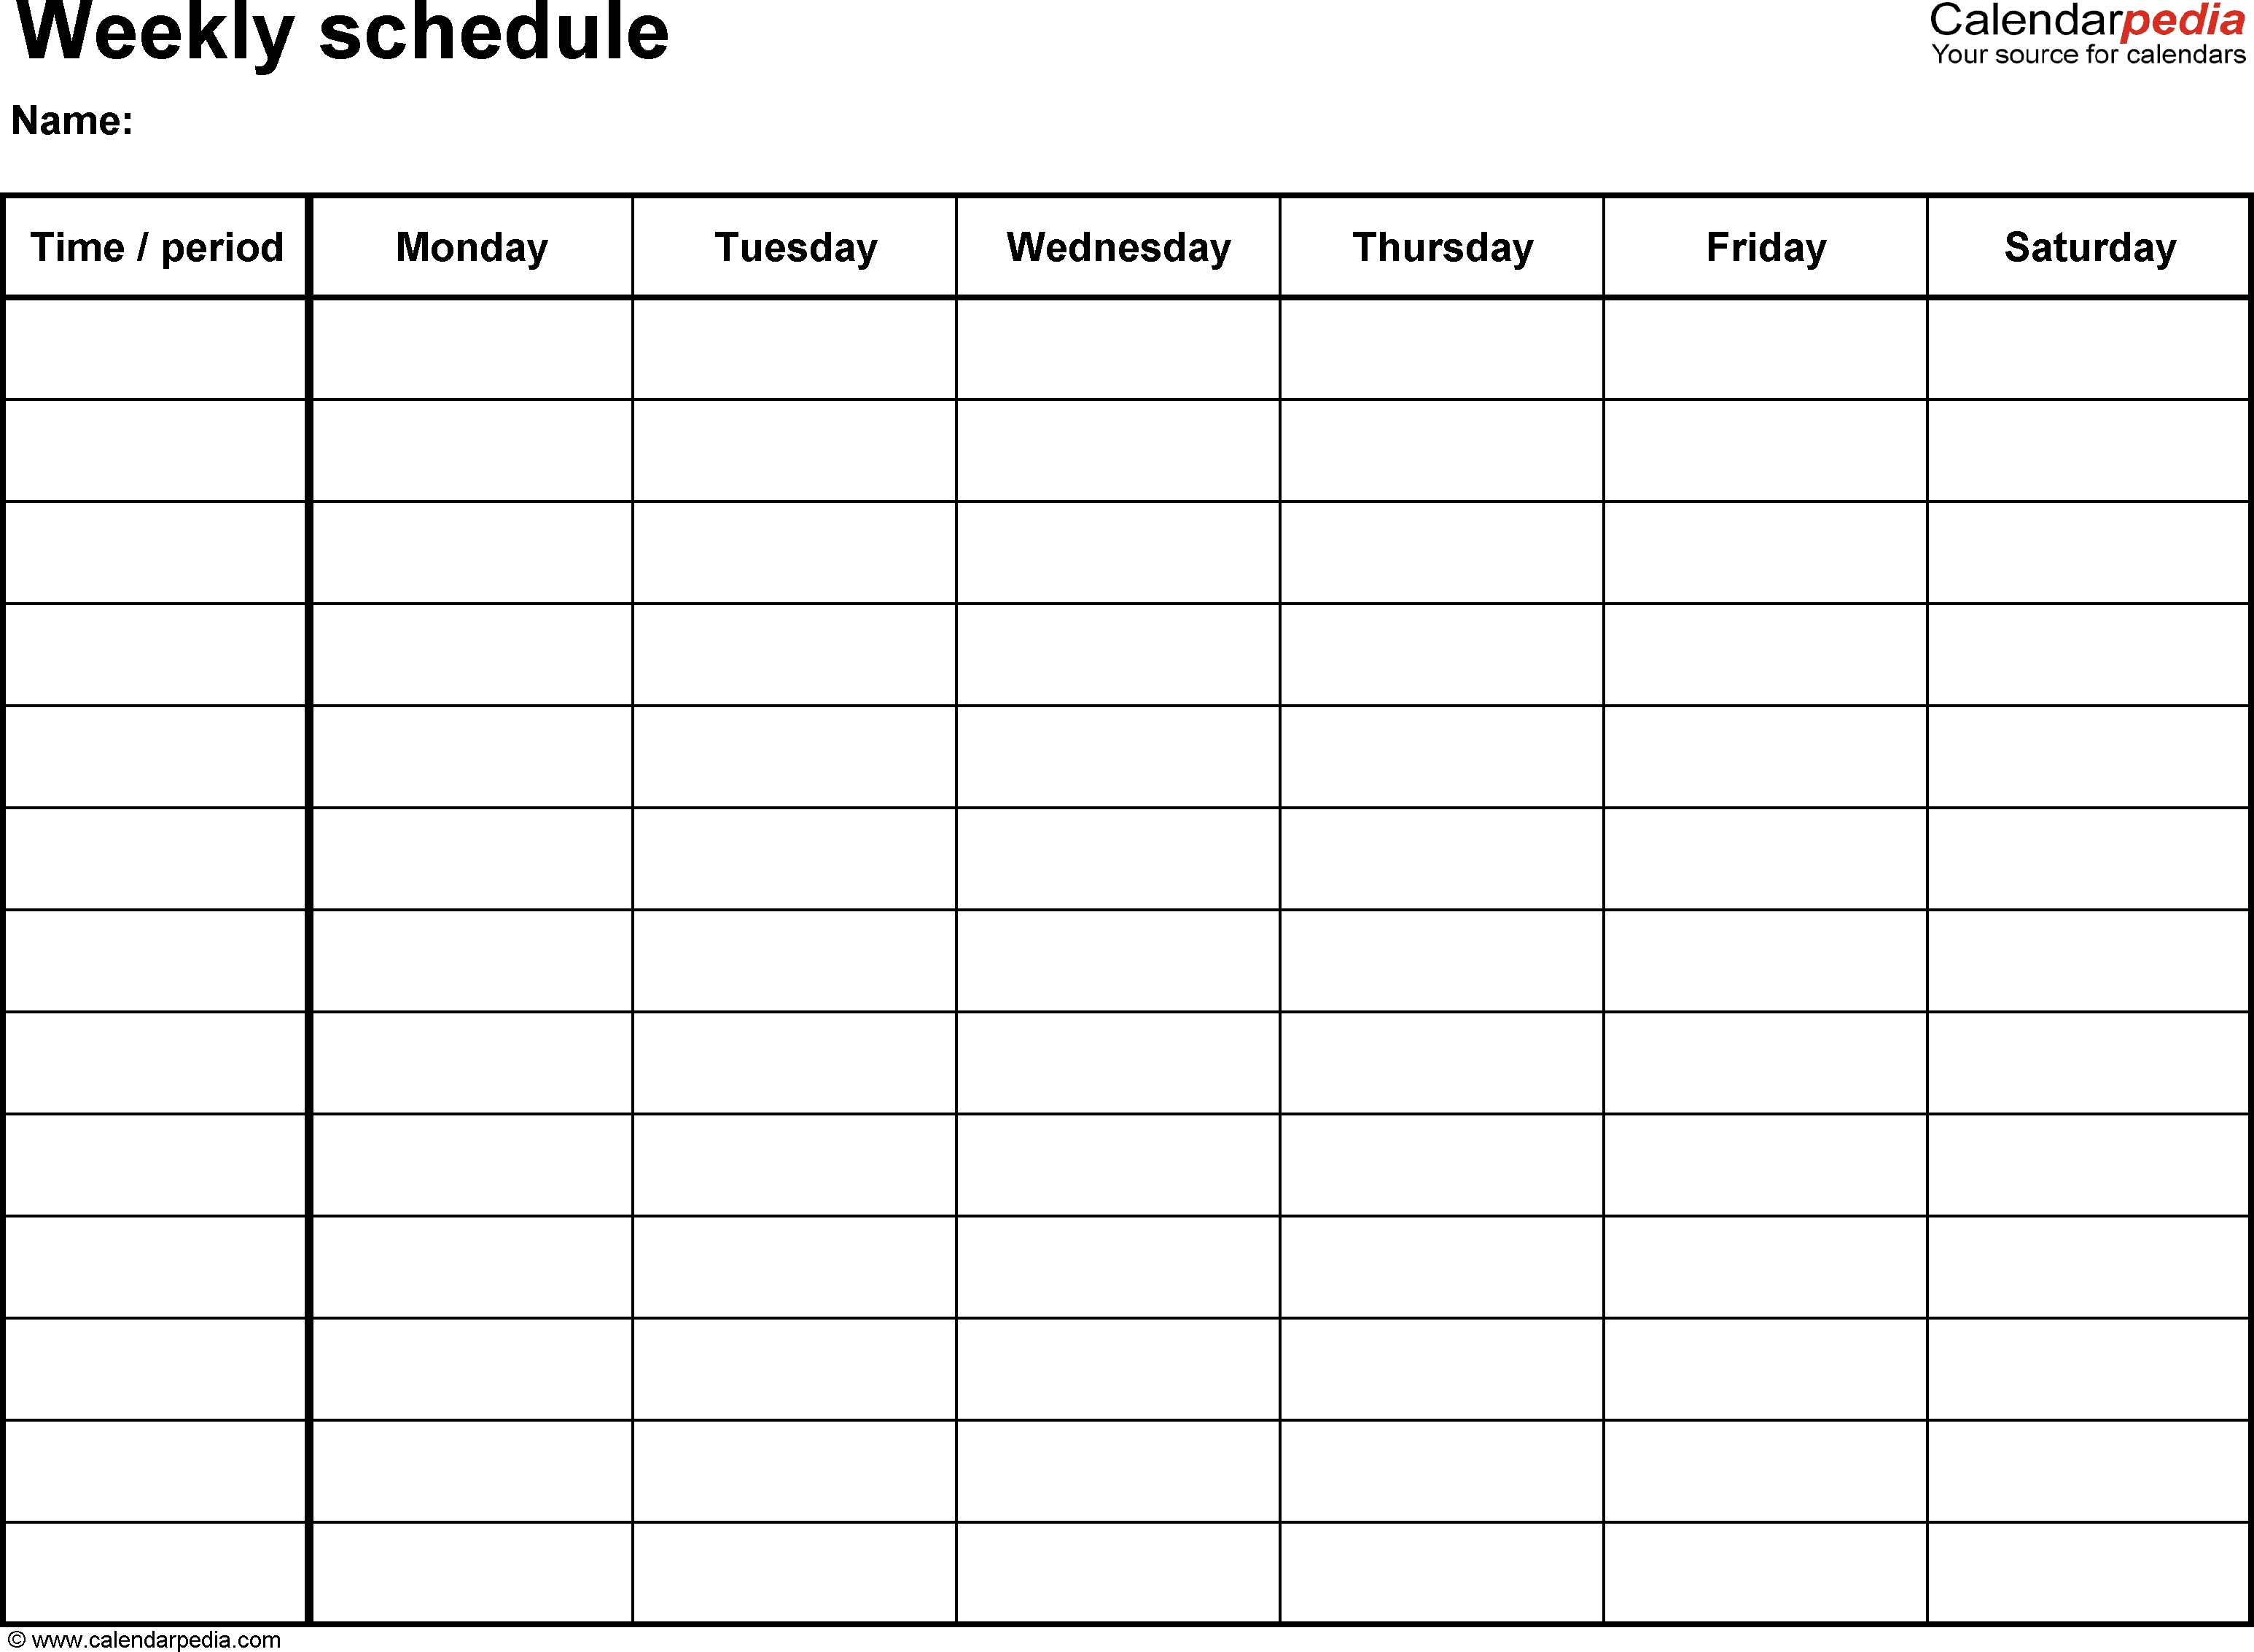 Free Weekly Schedule Templates For Word - 18 Templates Blank Six Week Calendar Printable